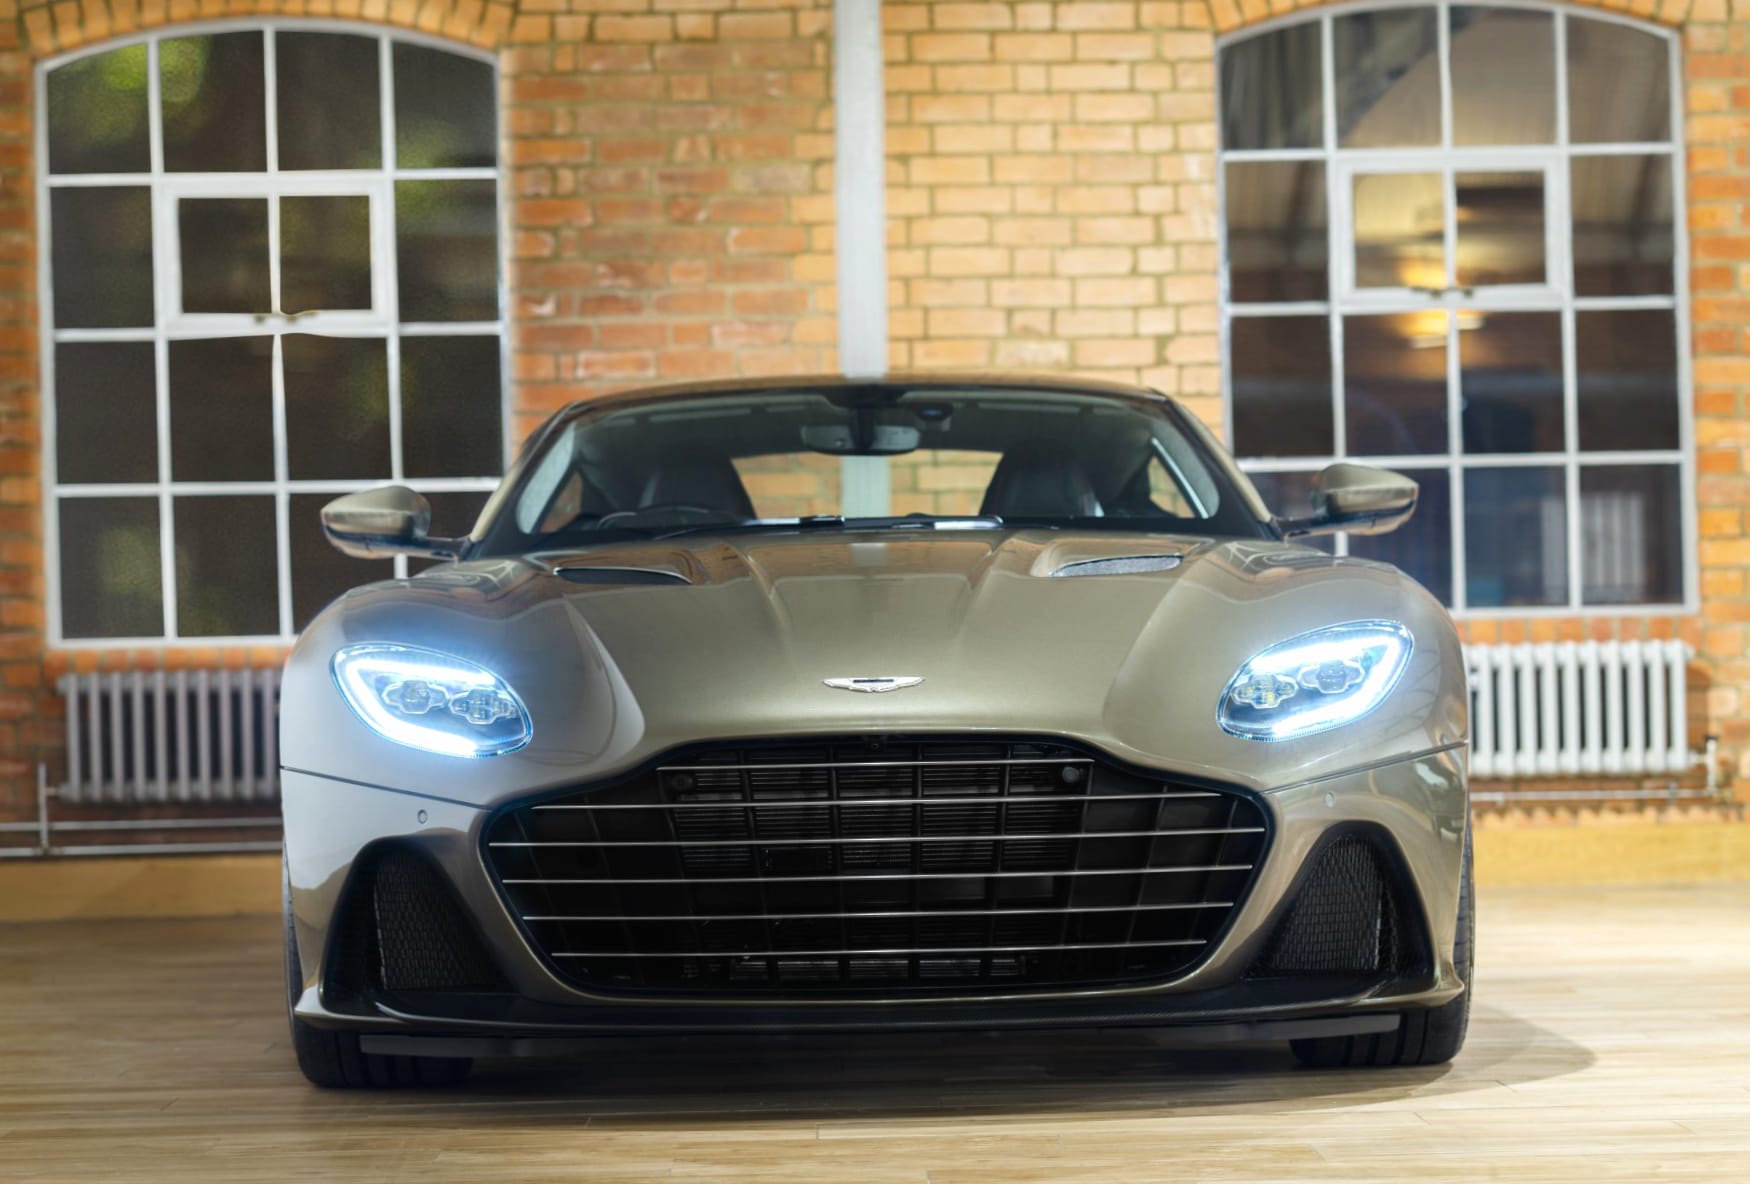 Aston Martin DBS Superleggera at 1024 x 1024 iPad size wallpapers HD quality